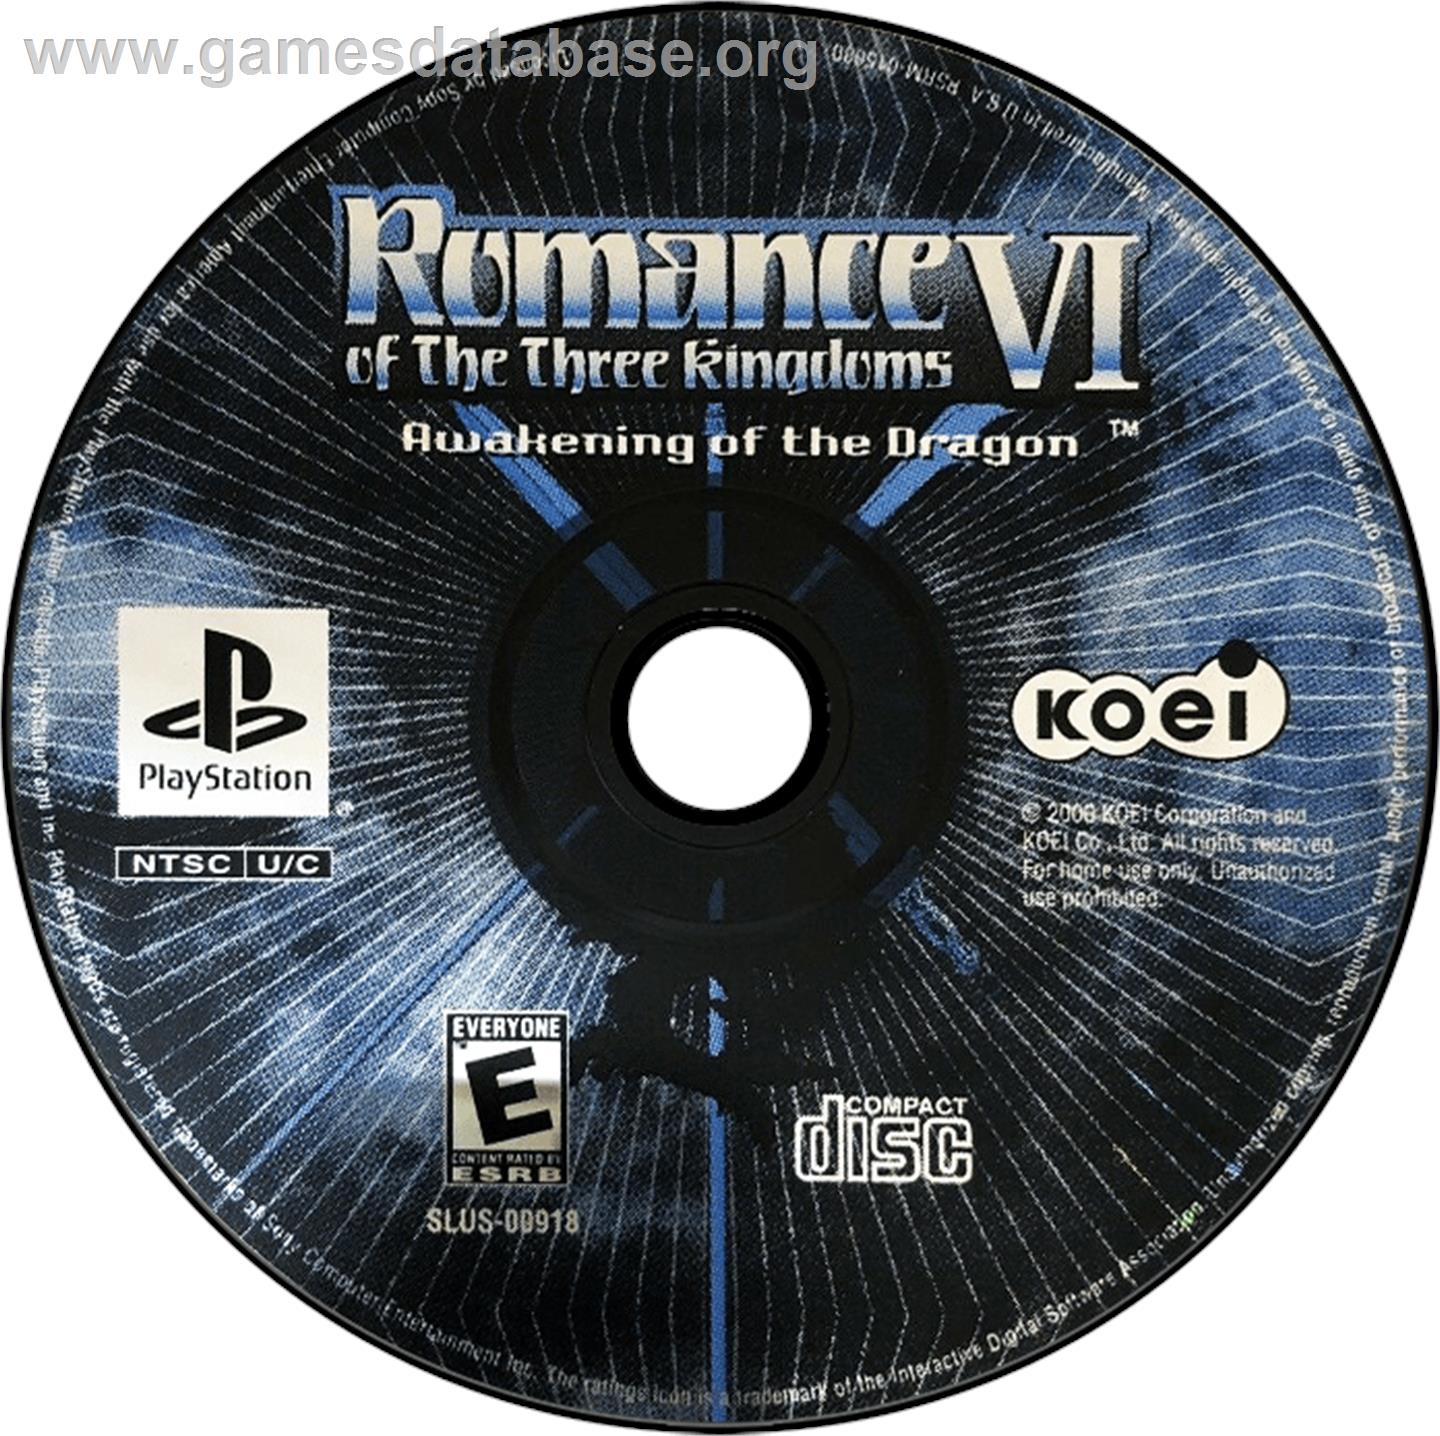 Romance of the Three Kingdoms VI: Awakening of the Dragon - Sony Playstation - Artwork - Disc